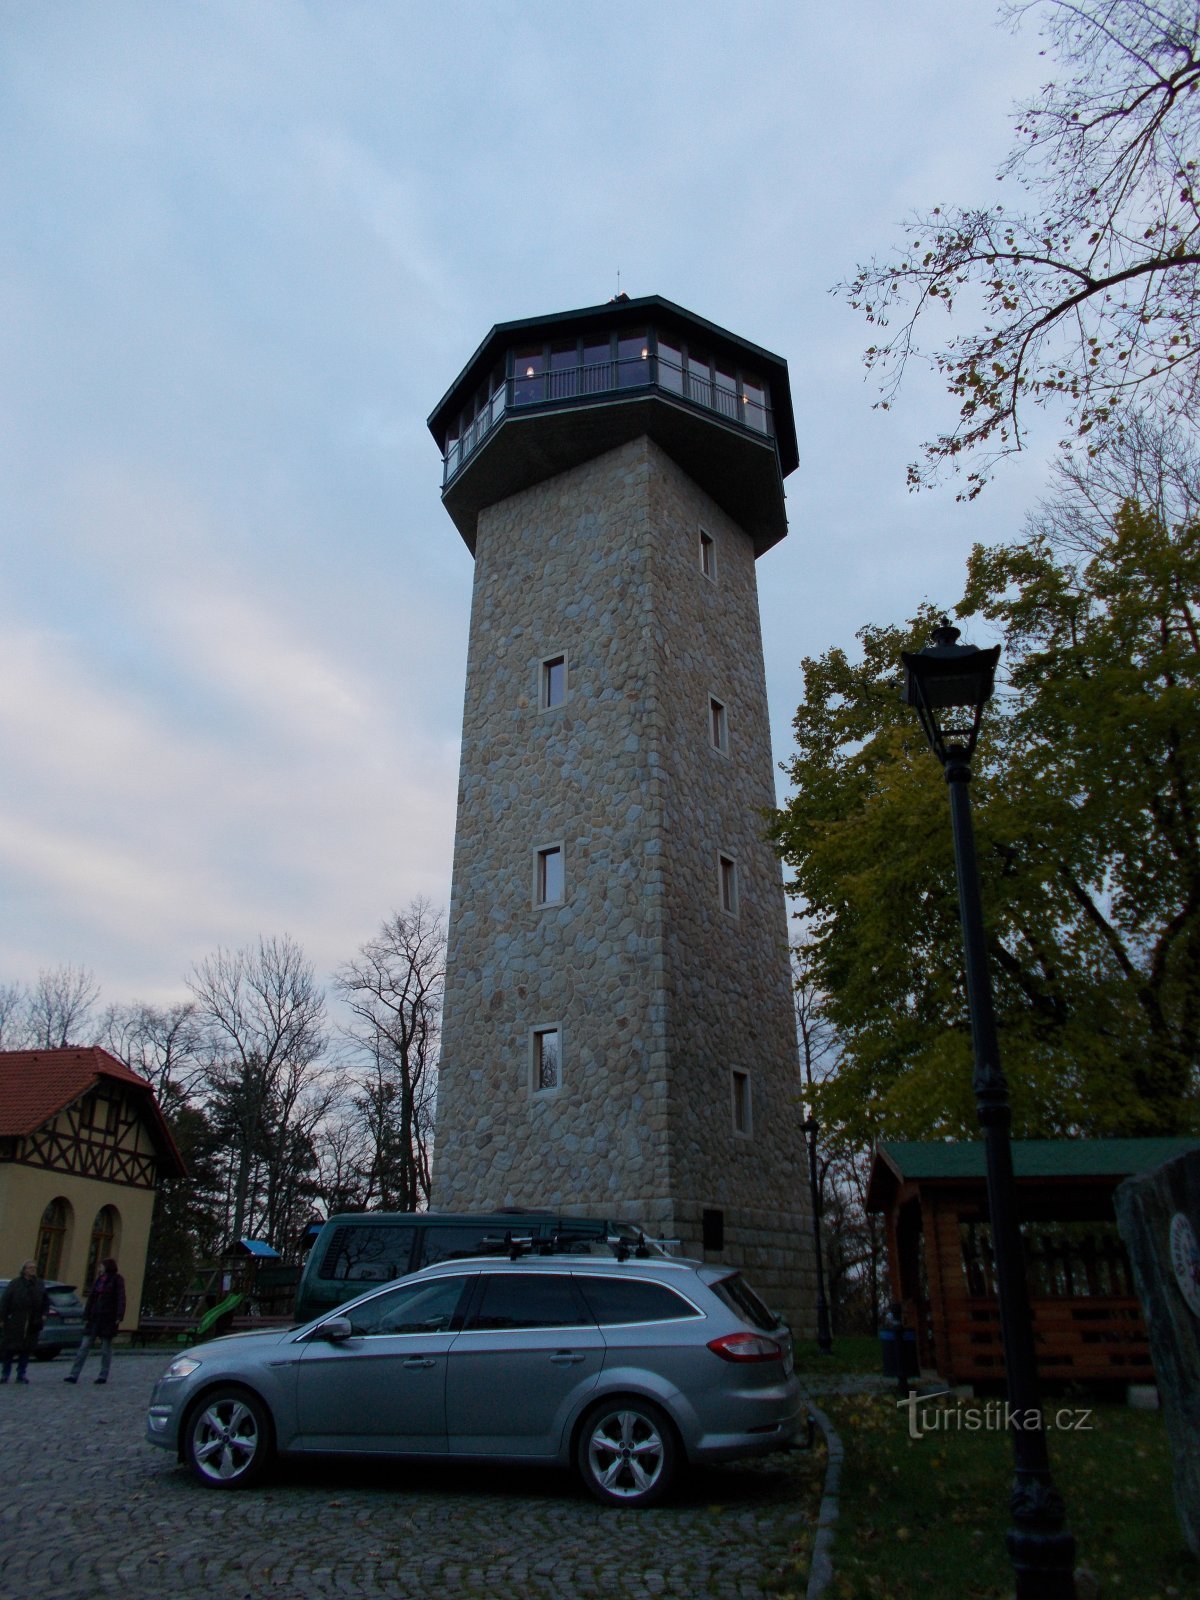 Torre de vigia Havířská bouda